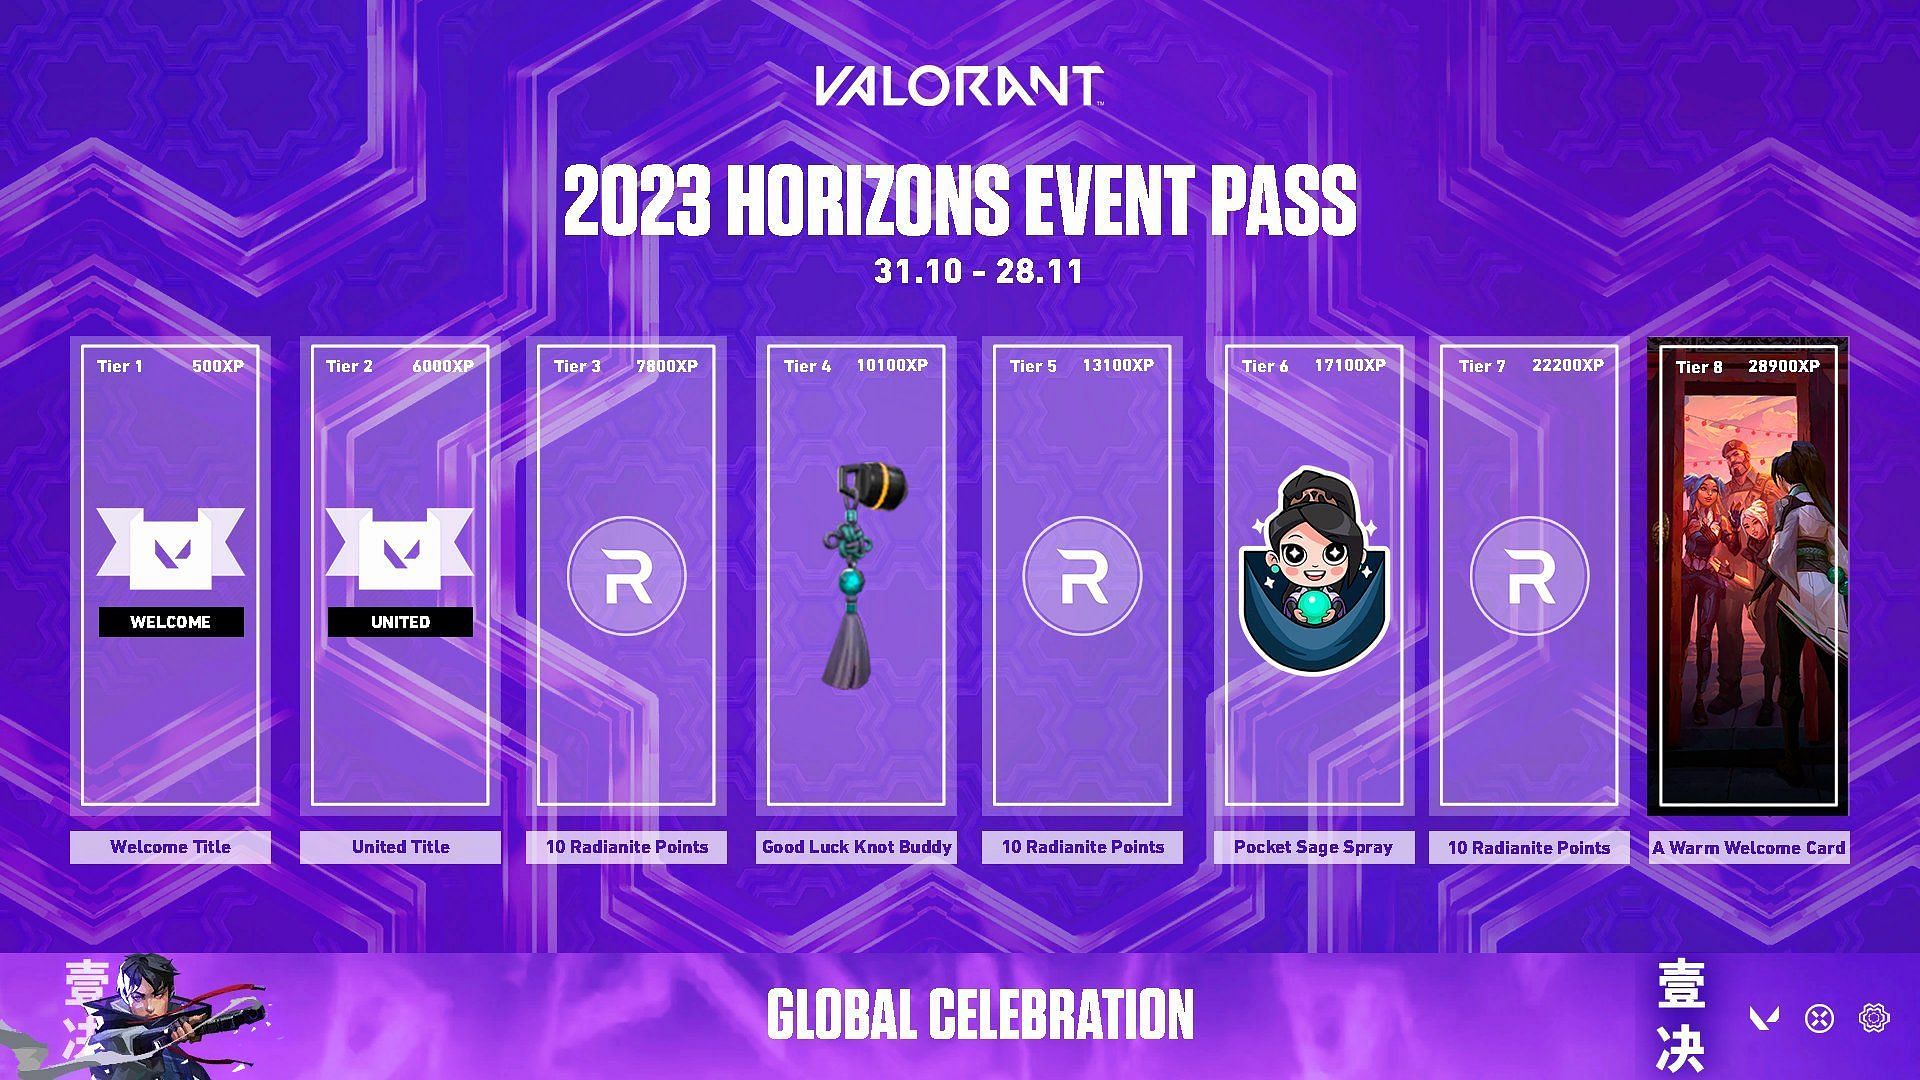 Horizon Event Pass 2023 in Valorant (Image via Riot Games and x.com/KLABOMEGA)